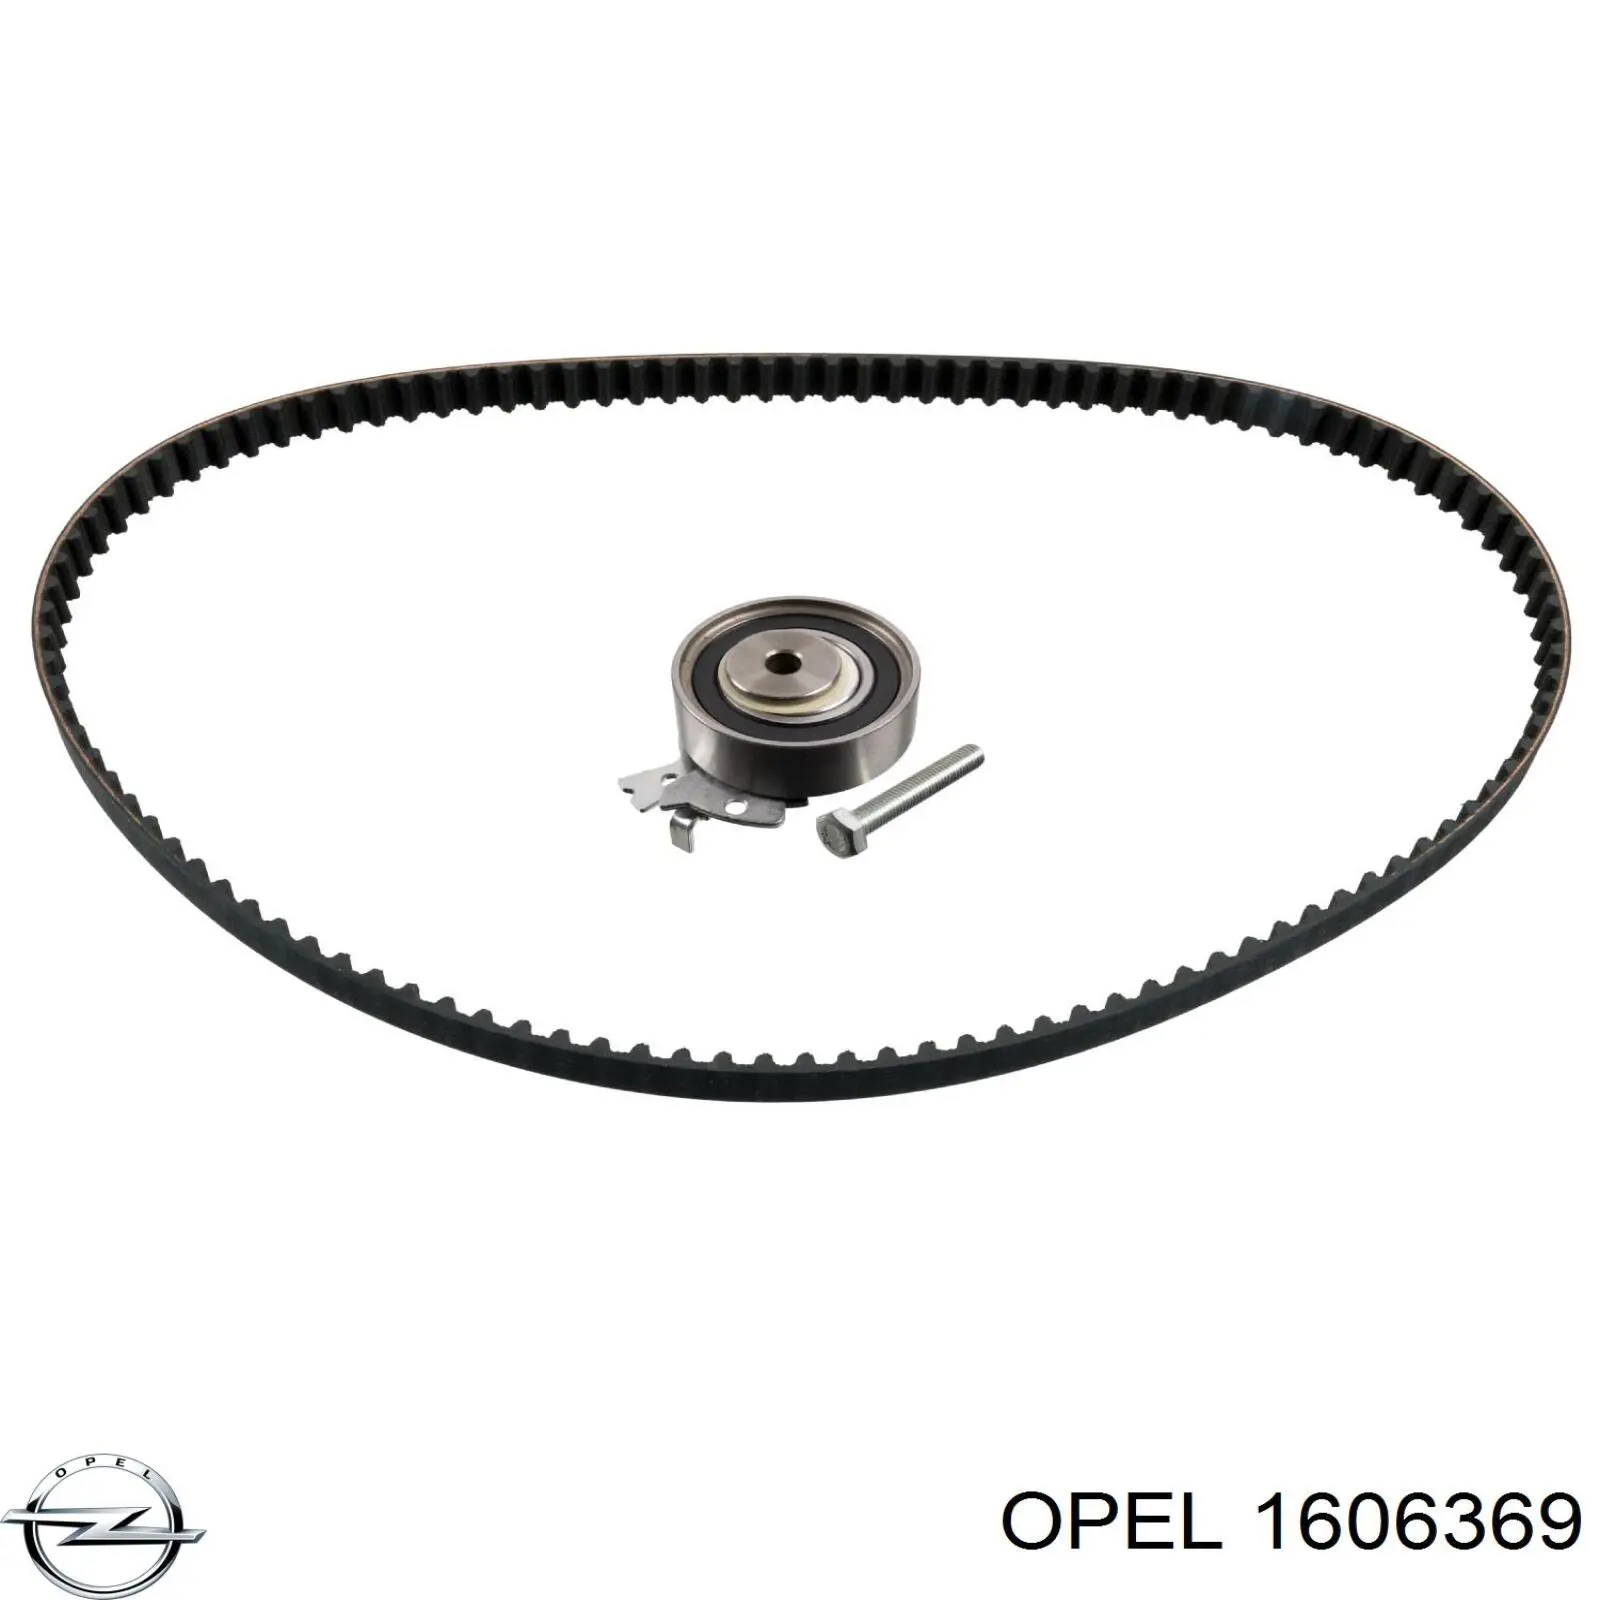 1606369 Opel kit de correa de distribución